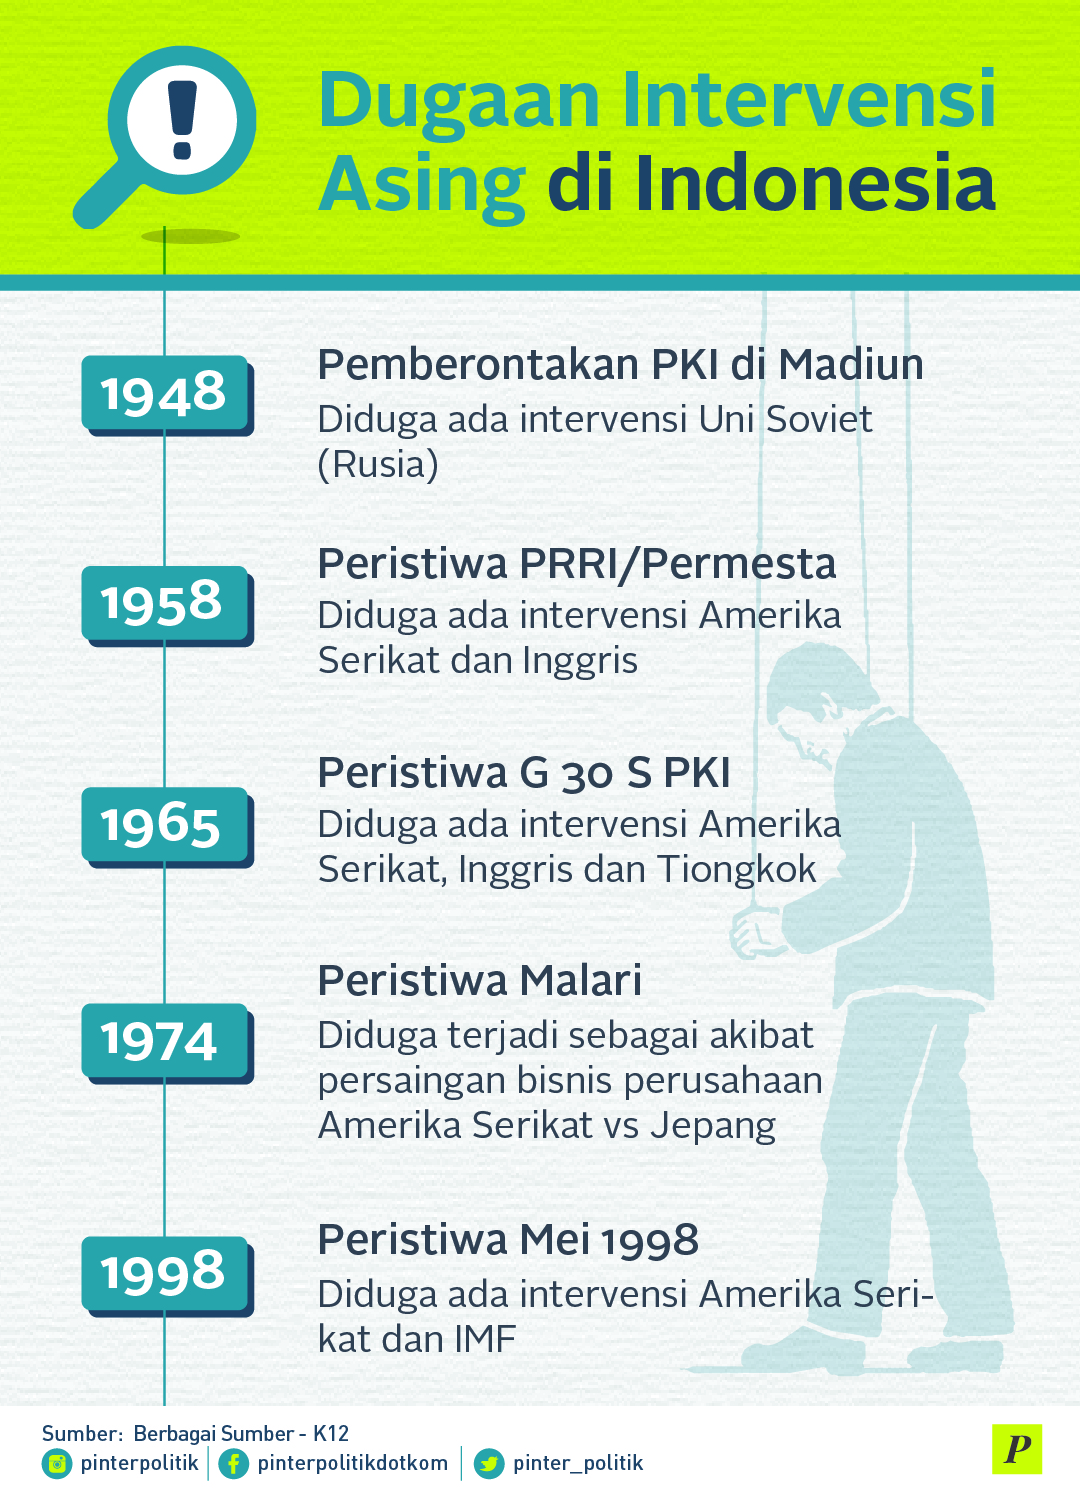 Intervensi Asing di Indonesia